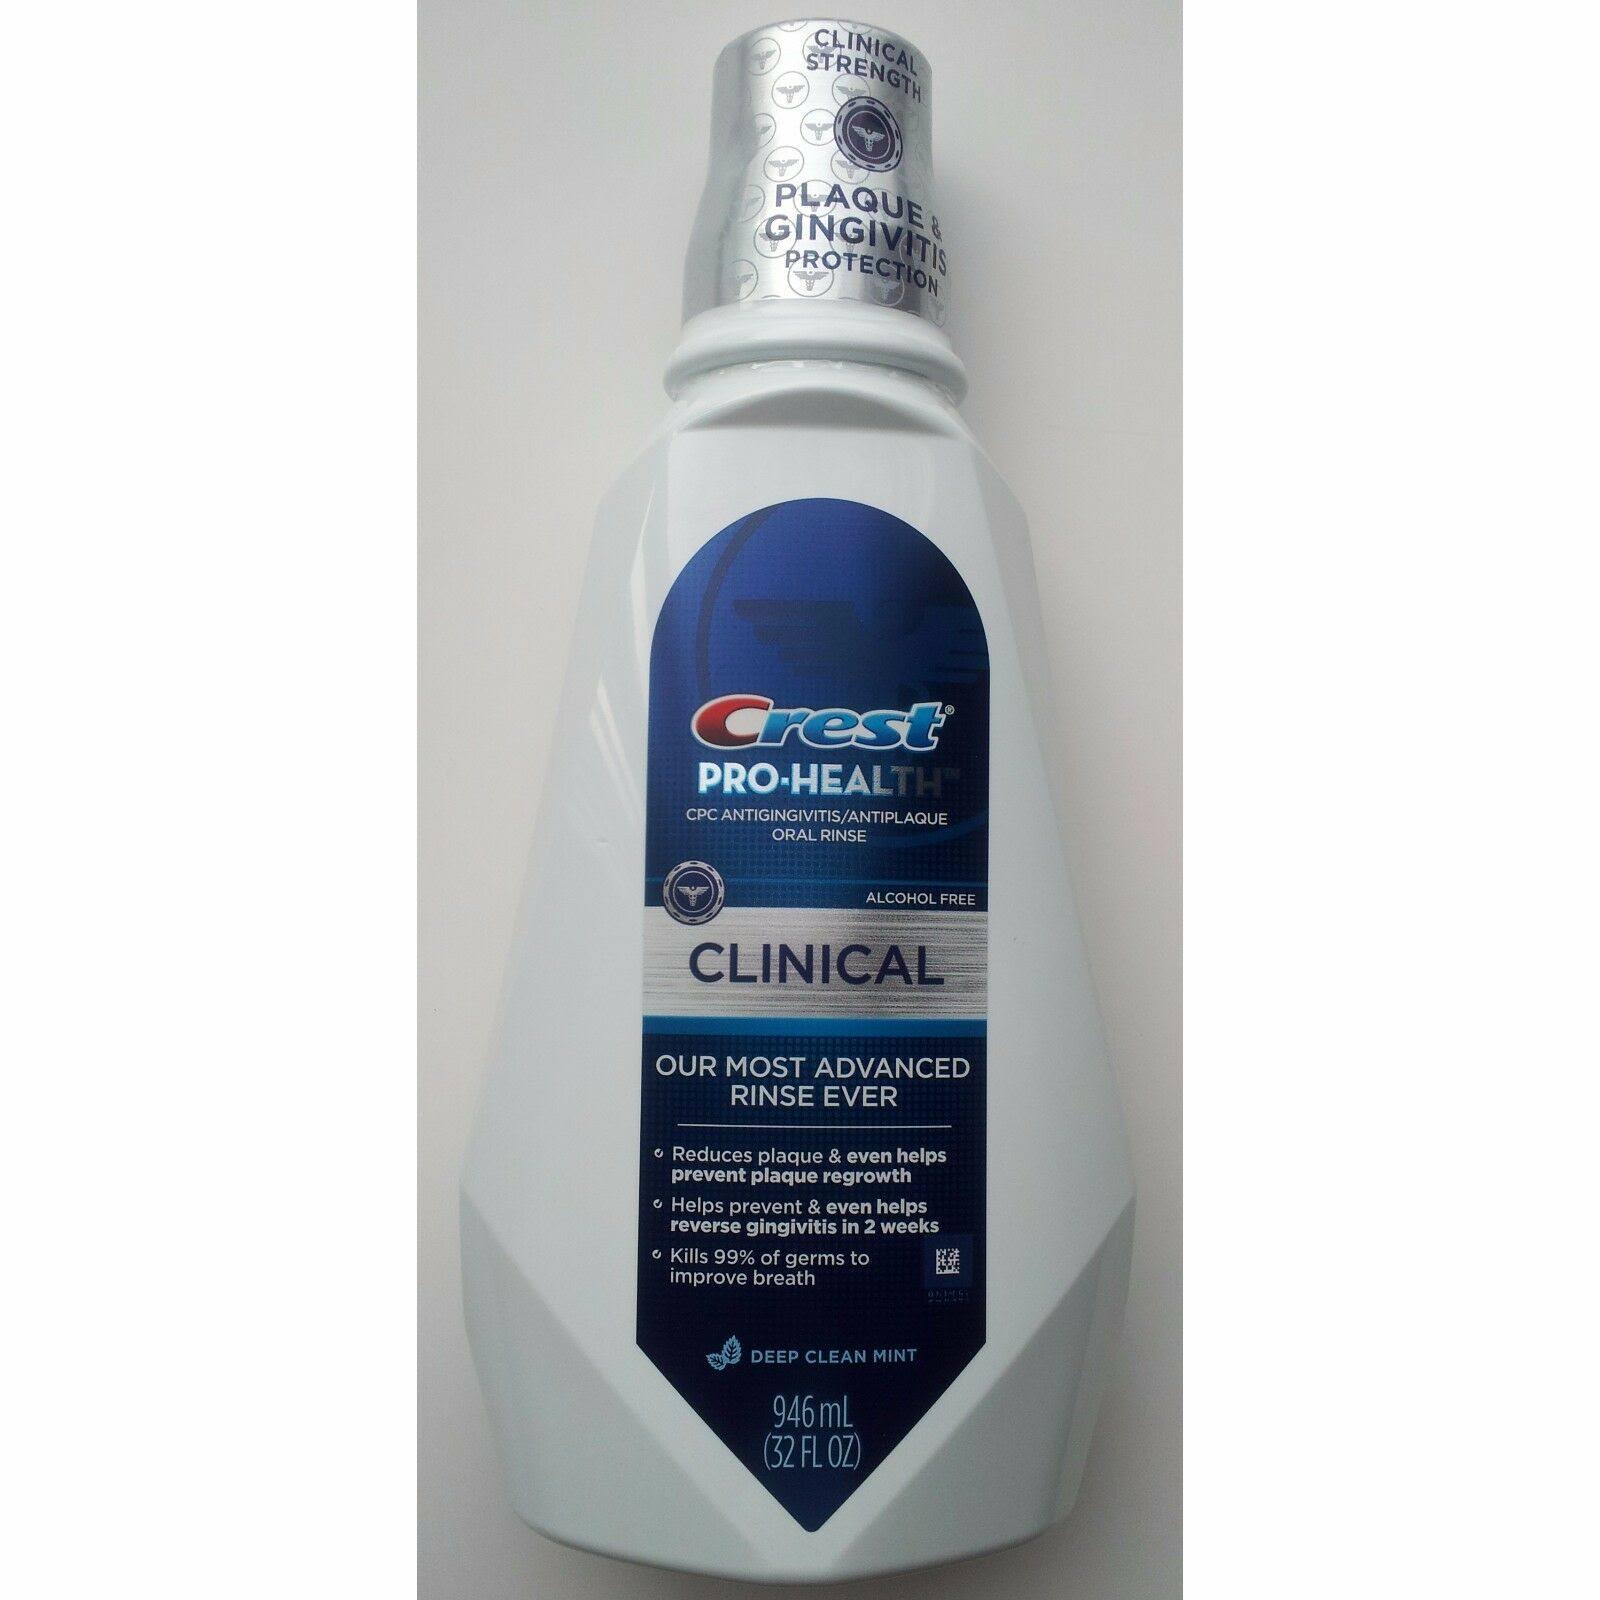 Crest Pro-Health Clinical Rinse - Deep Clean Mint, 946ml